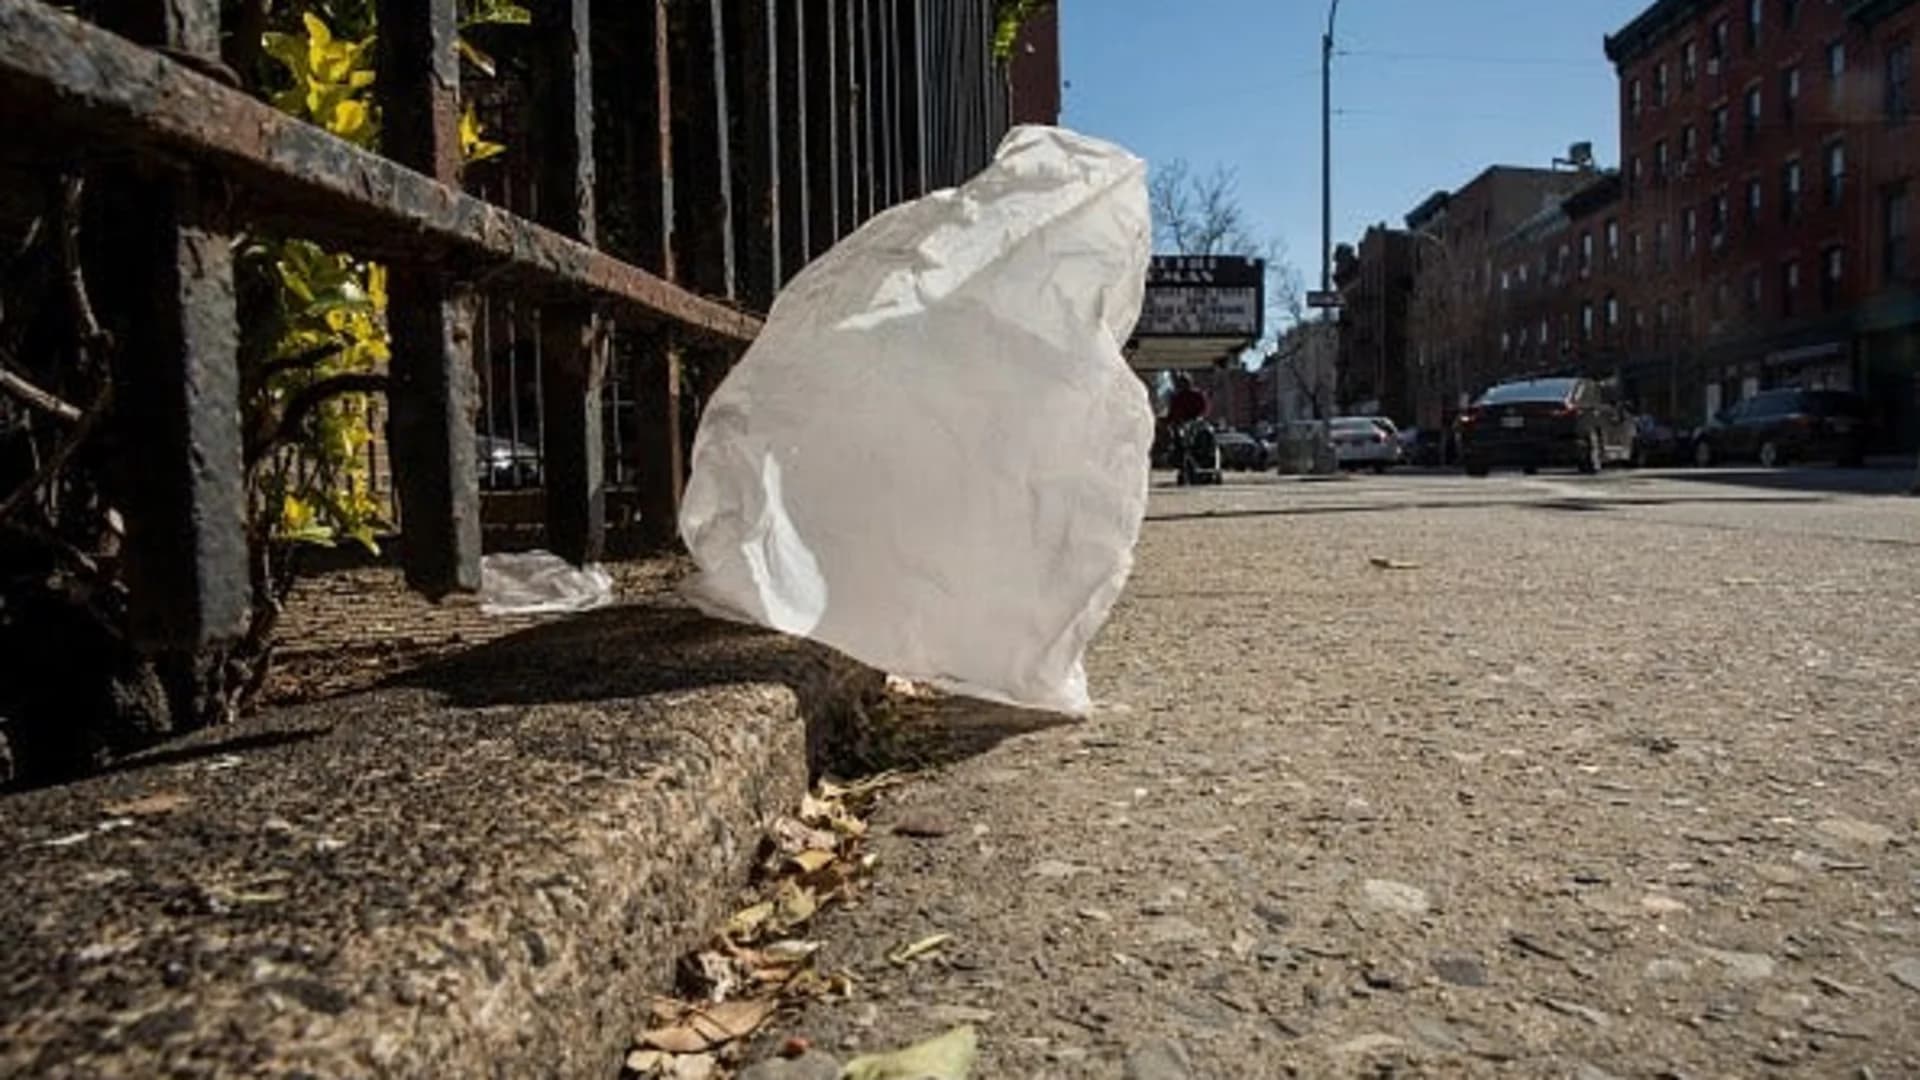 #N12BX: Plastic bag ban